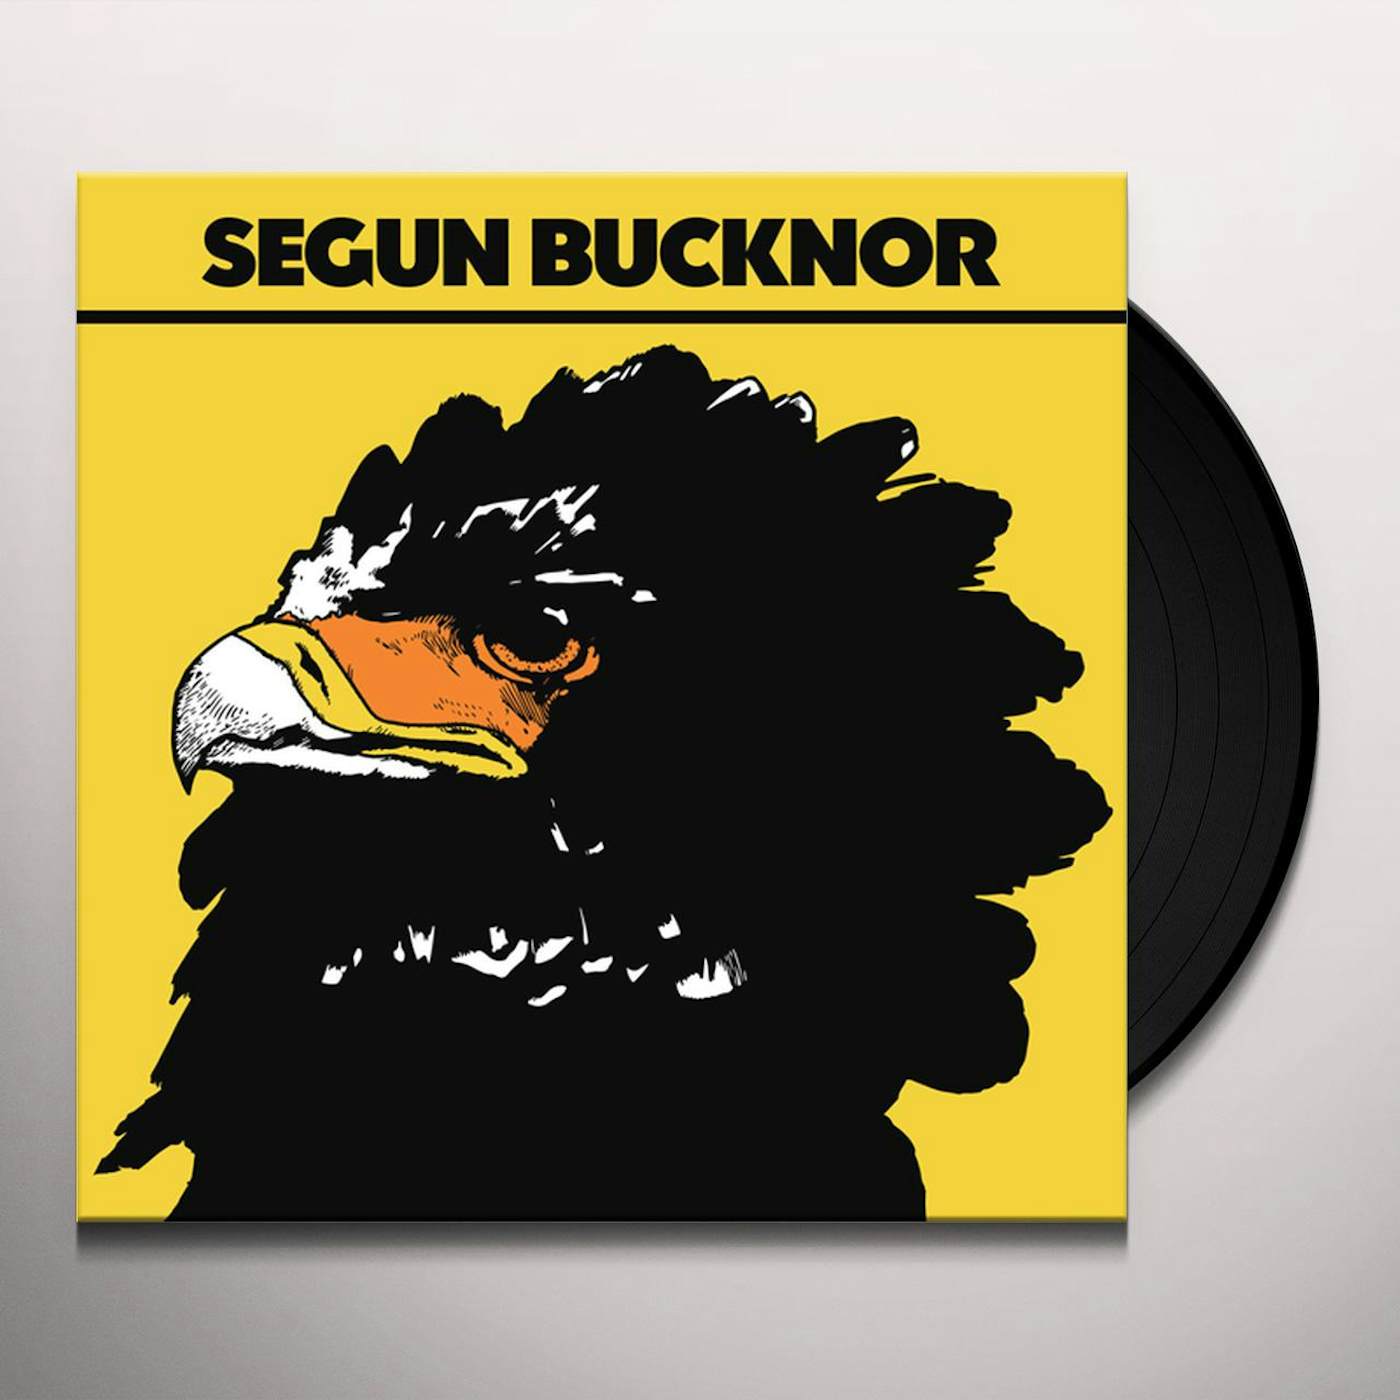 Segun Bucknor Vinyl Record